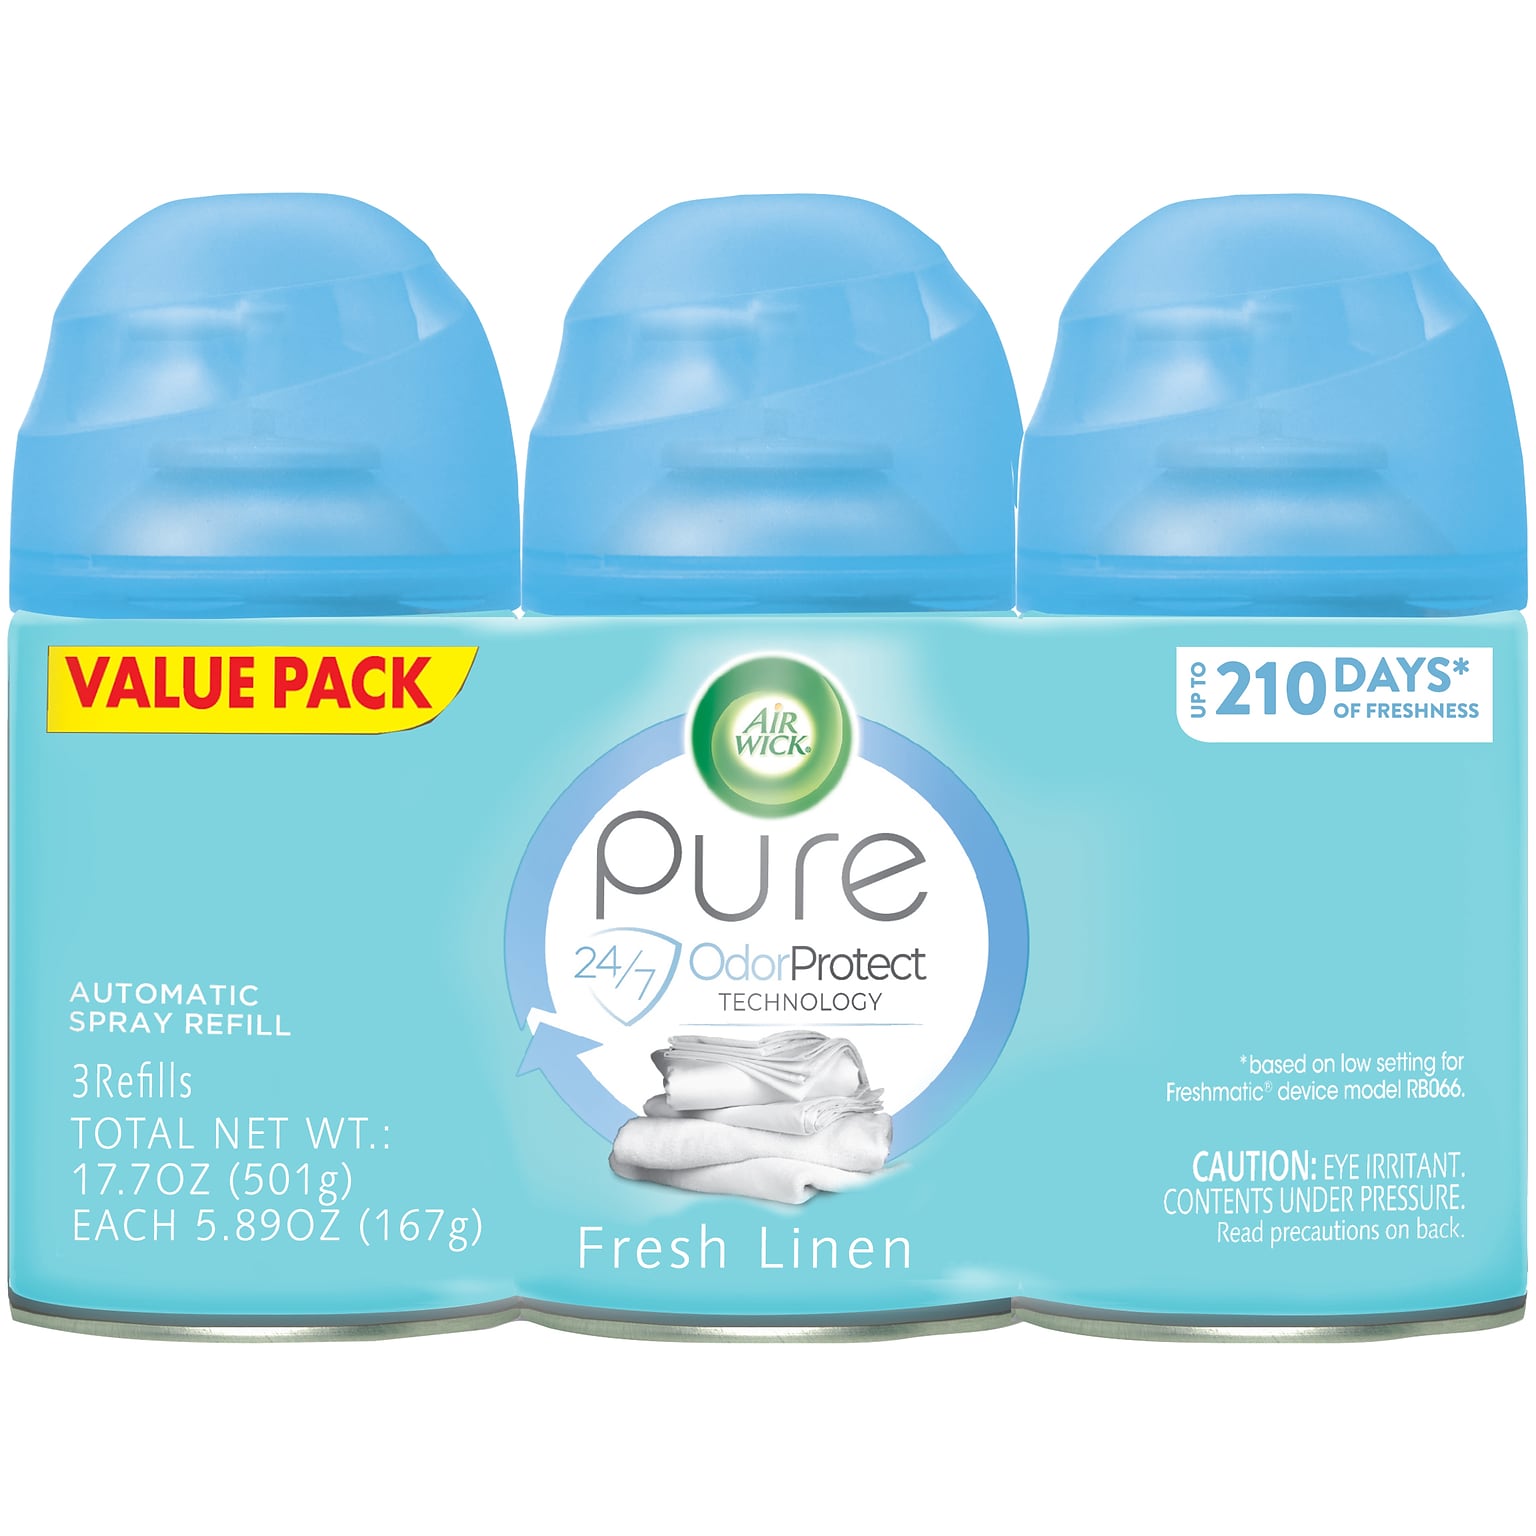 Air Wick Pure Freshmatic Ultra Air Freshener Spray Triple Refill, Fresh Linen Scent, 5.89 Oz., 3/Pack (02404)